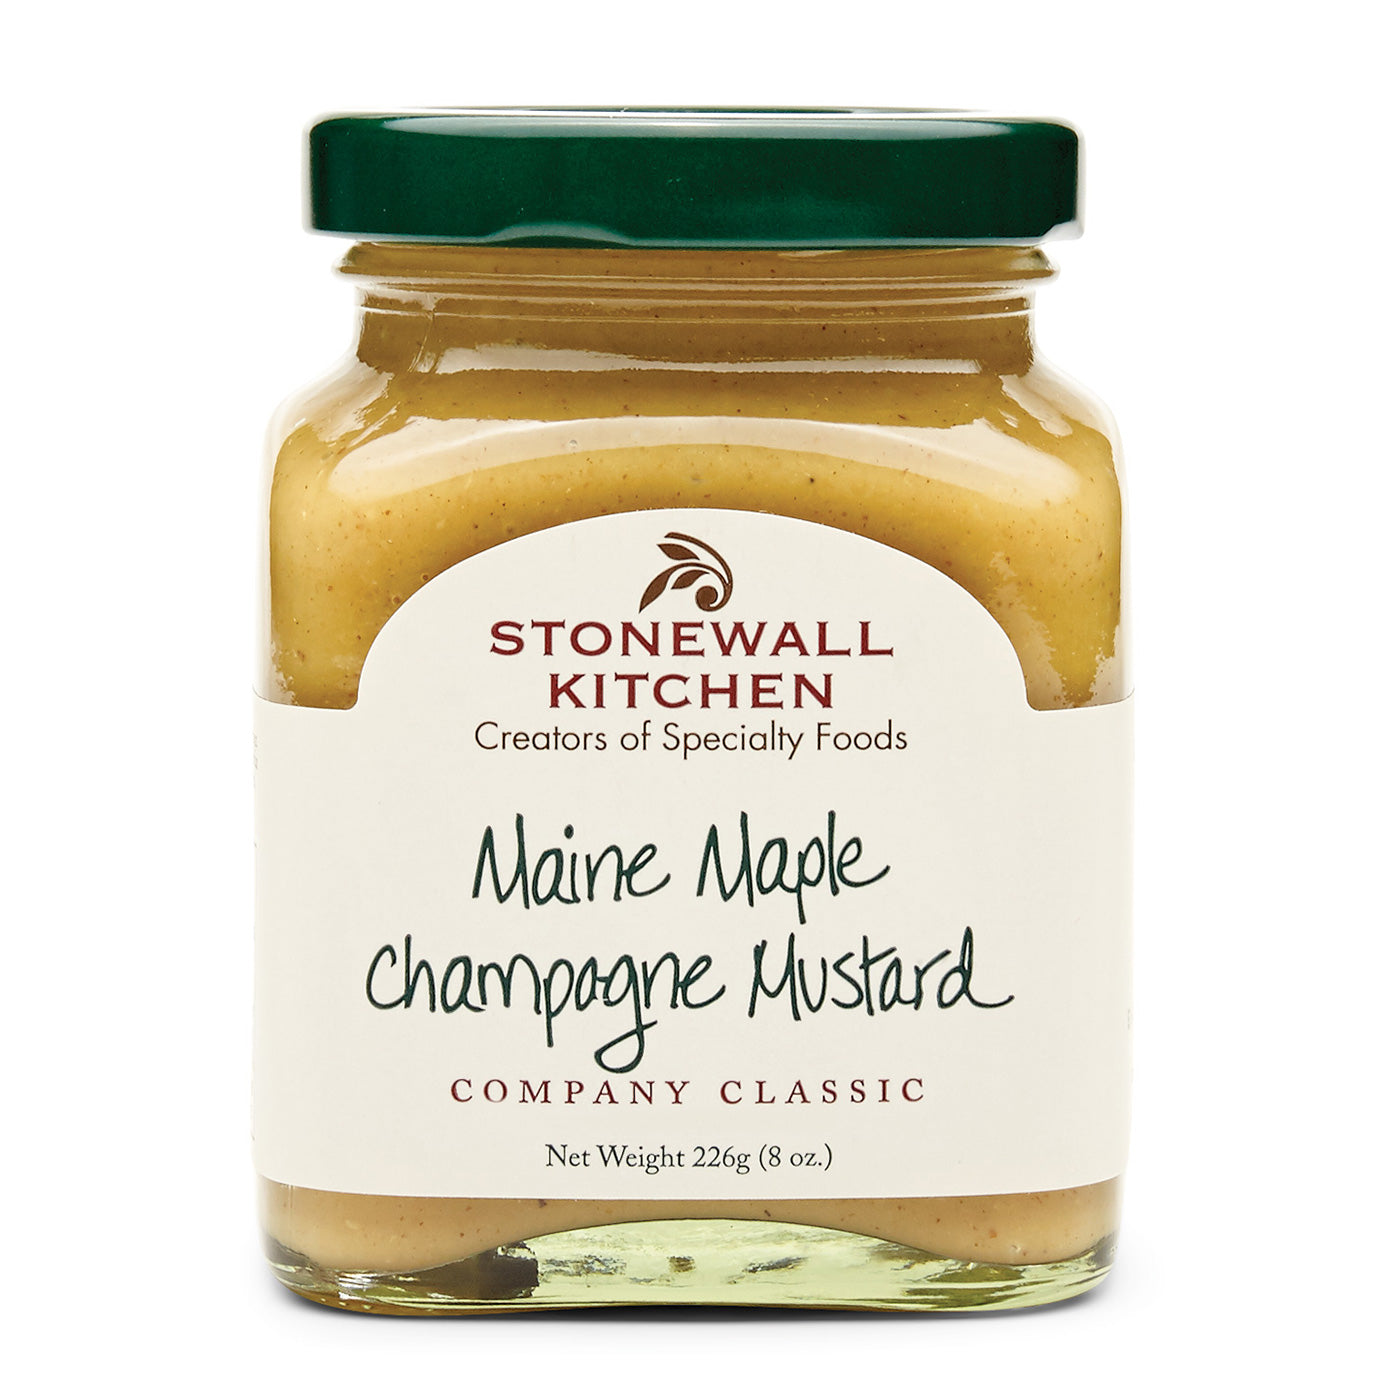 Stonewall Kitchen Maine Maple Champagne Mustard - Olive Oil Etcetera 